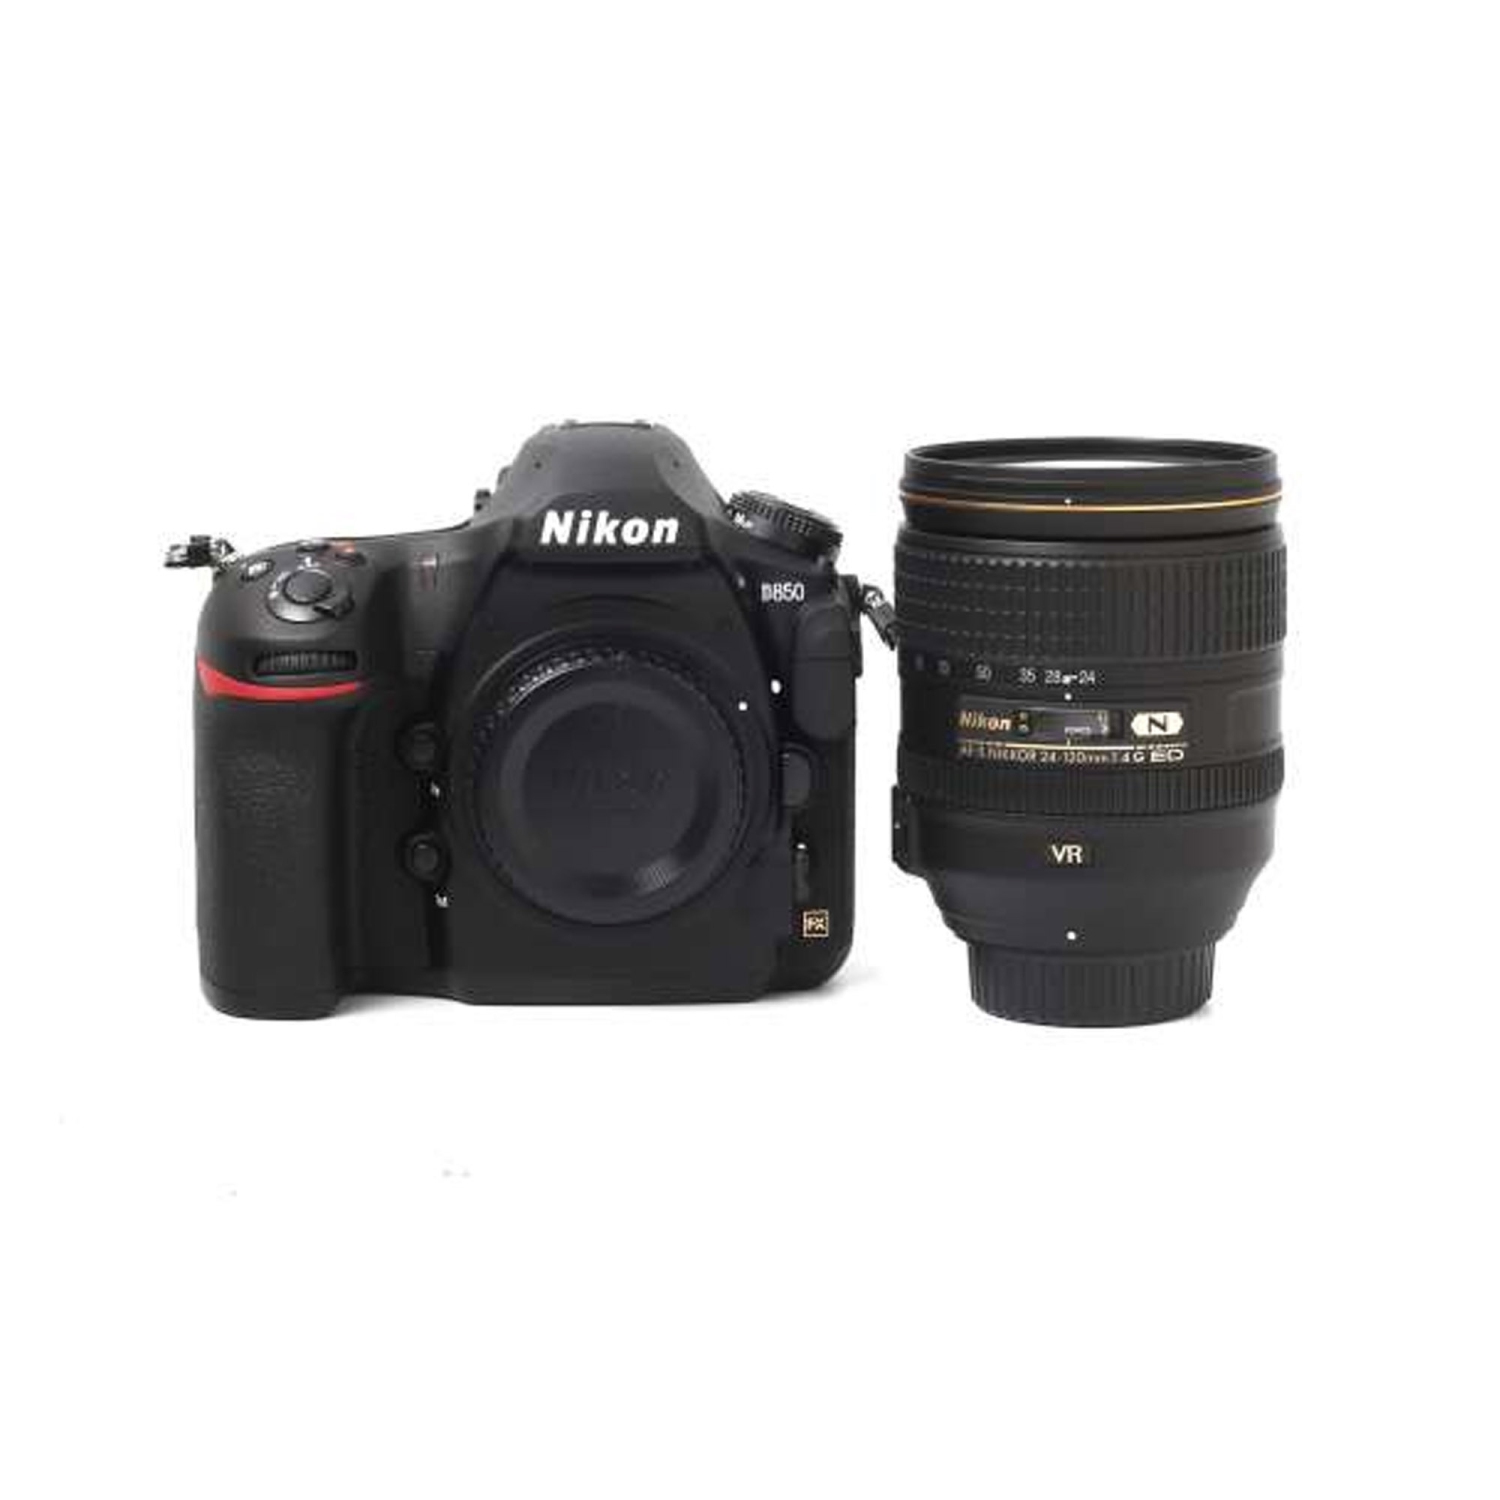 Nikon D780 Digital SLR Camera with 24-120mm lens kit - US Version w/ Seller Warranty